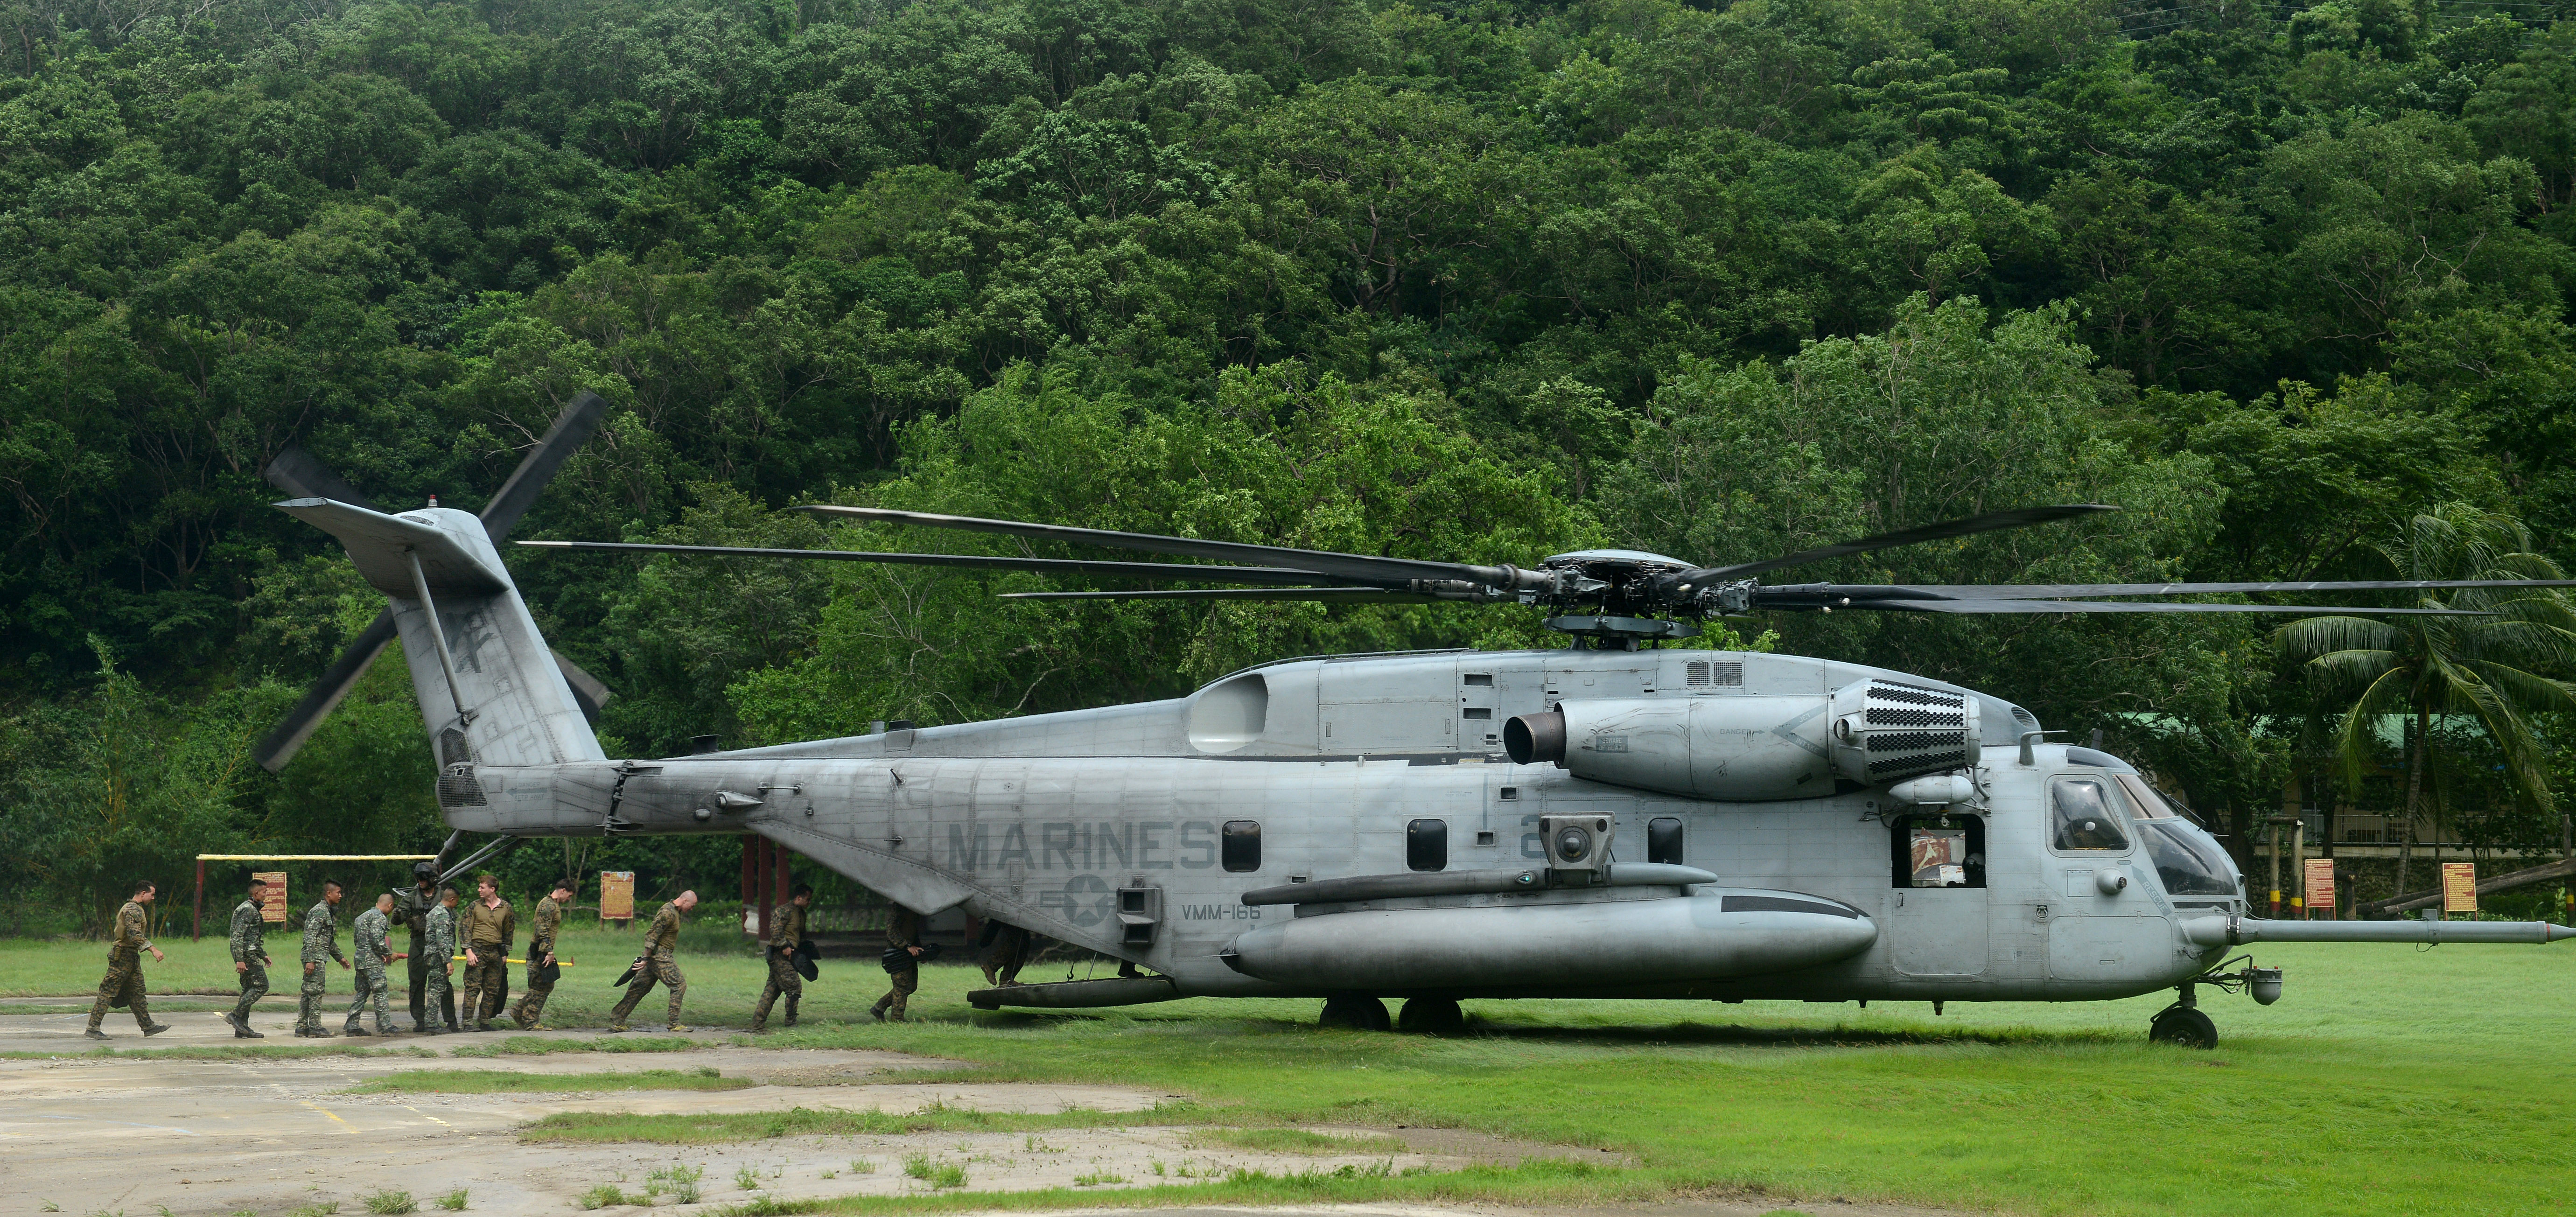 A Marine CH-53E Super Stallion helicopter